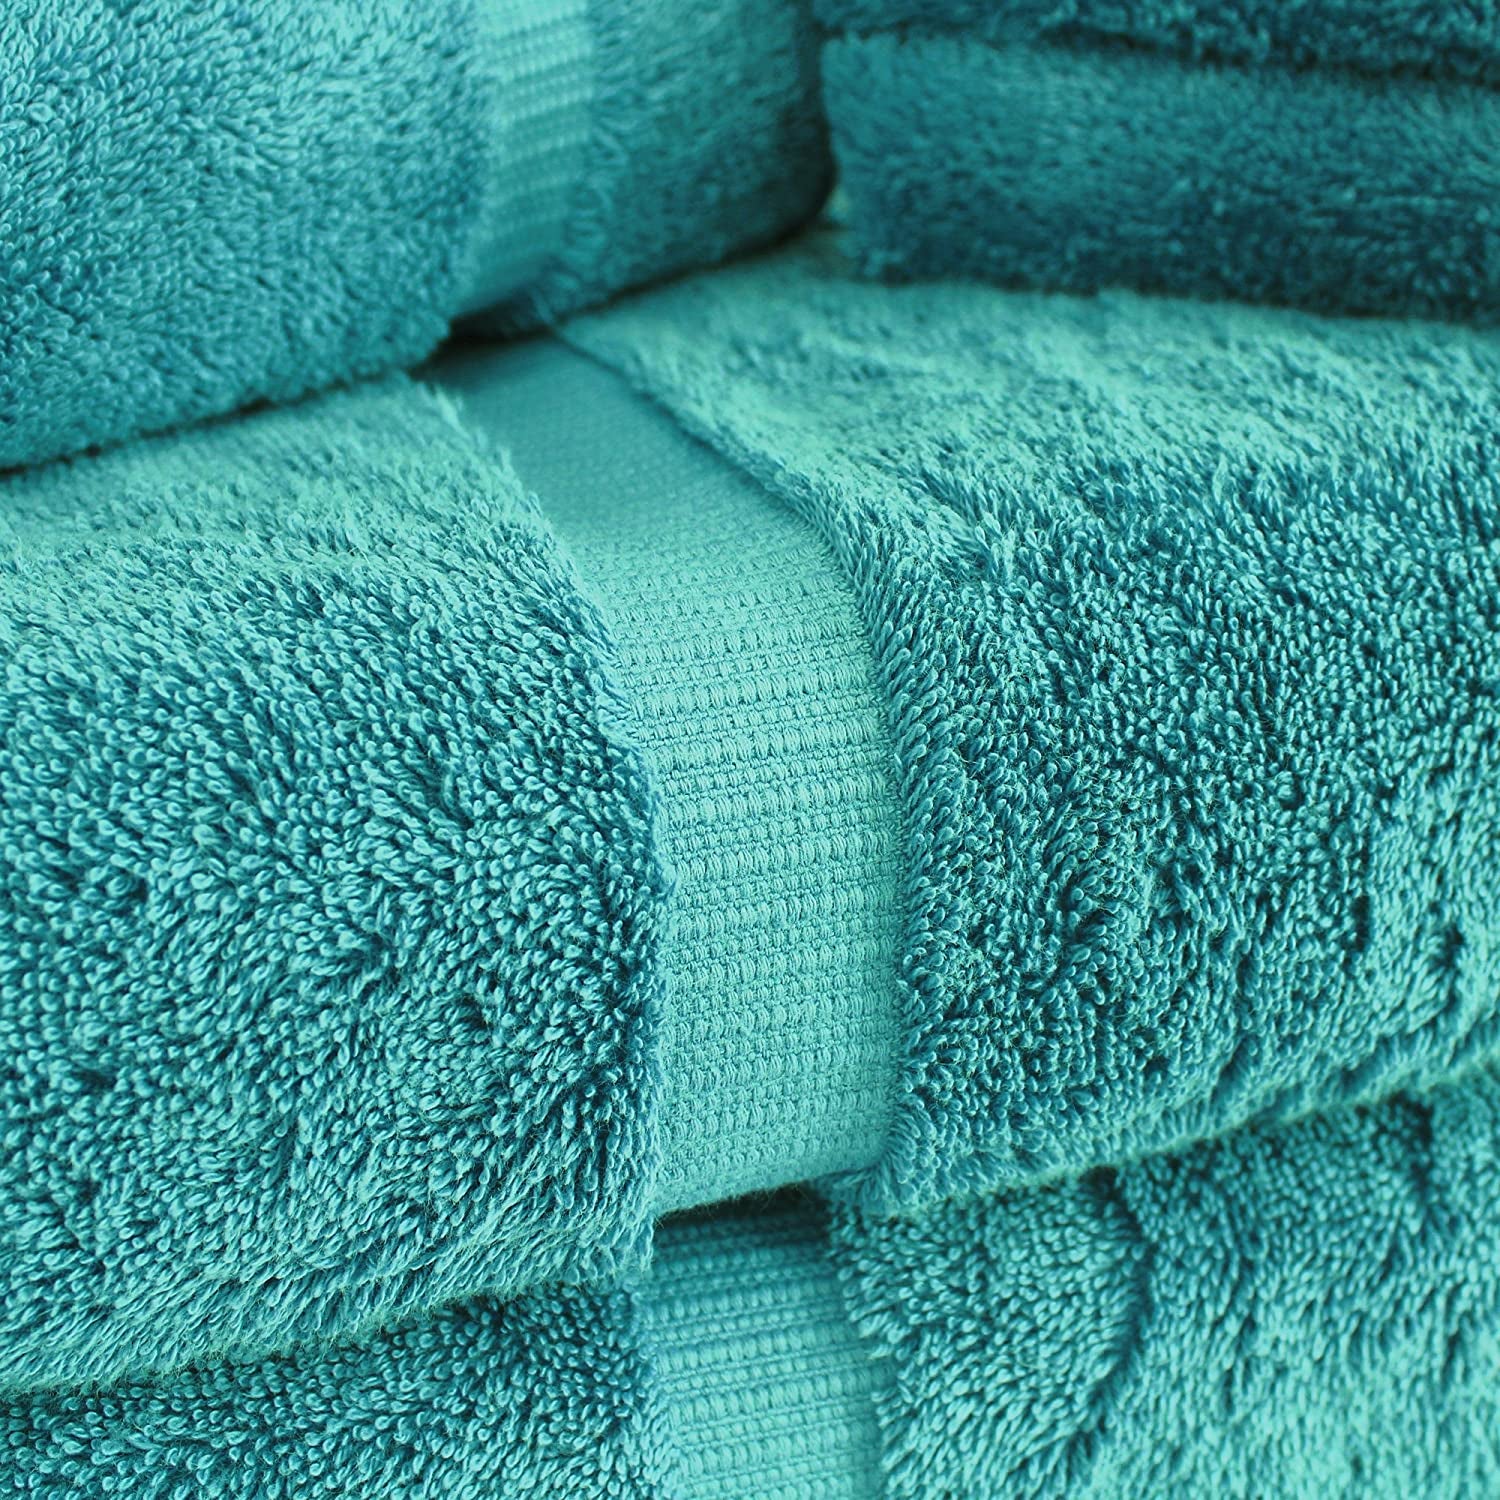 "Luxurious Aqua Blue Turkish Cotton Towel Set - 8-Piece Bundle of Super Soft and Ultra Absorbent Towels"